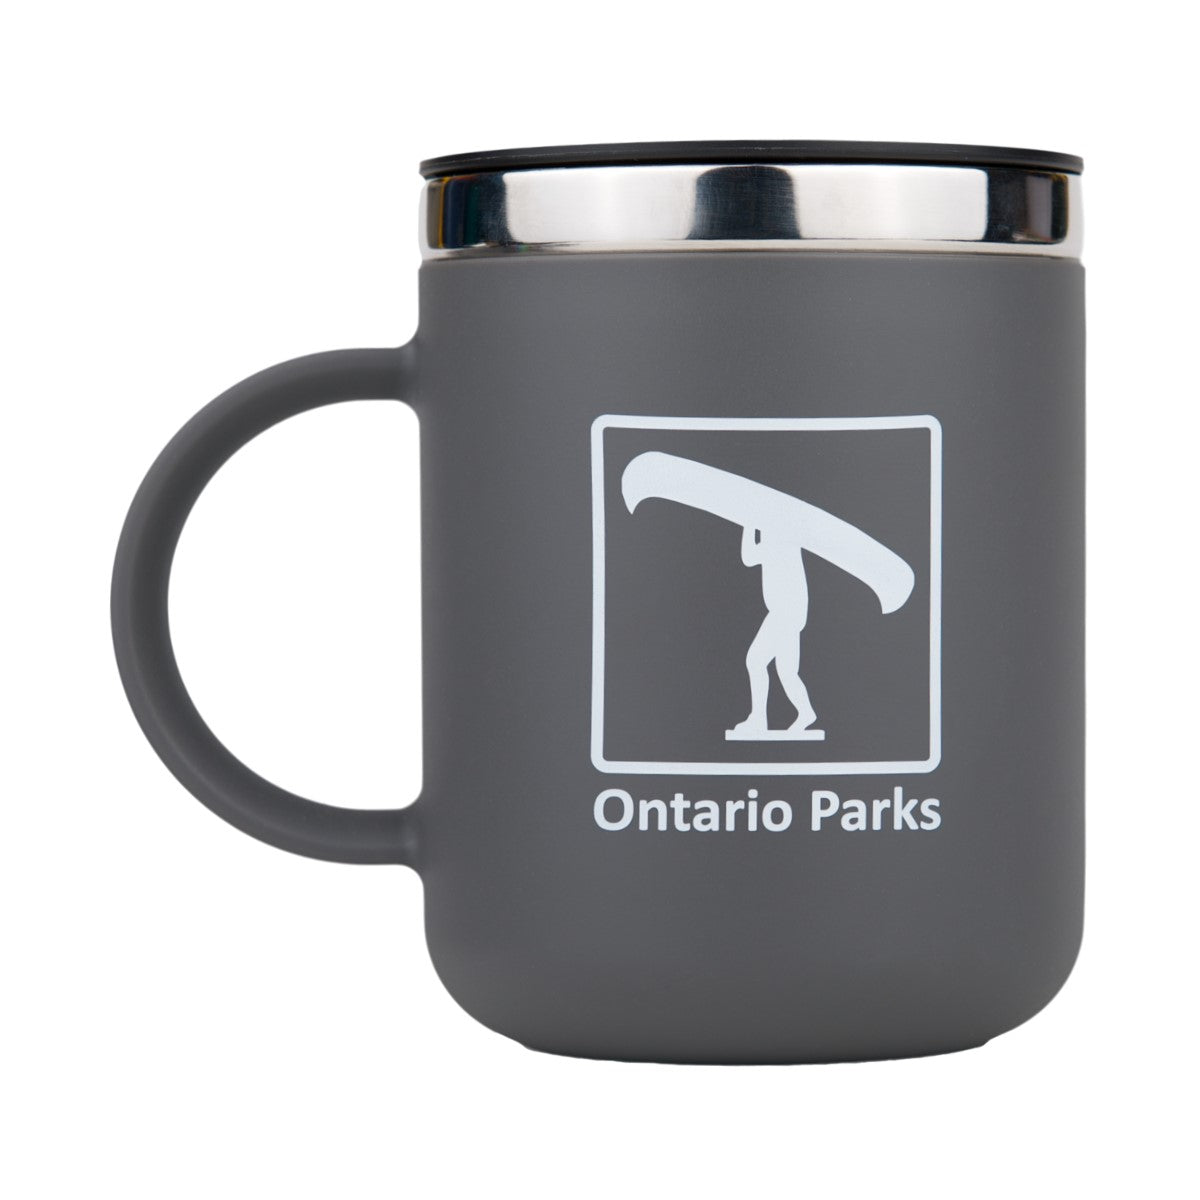 Front of Ontario Parks mug showing portage symbol